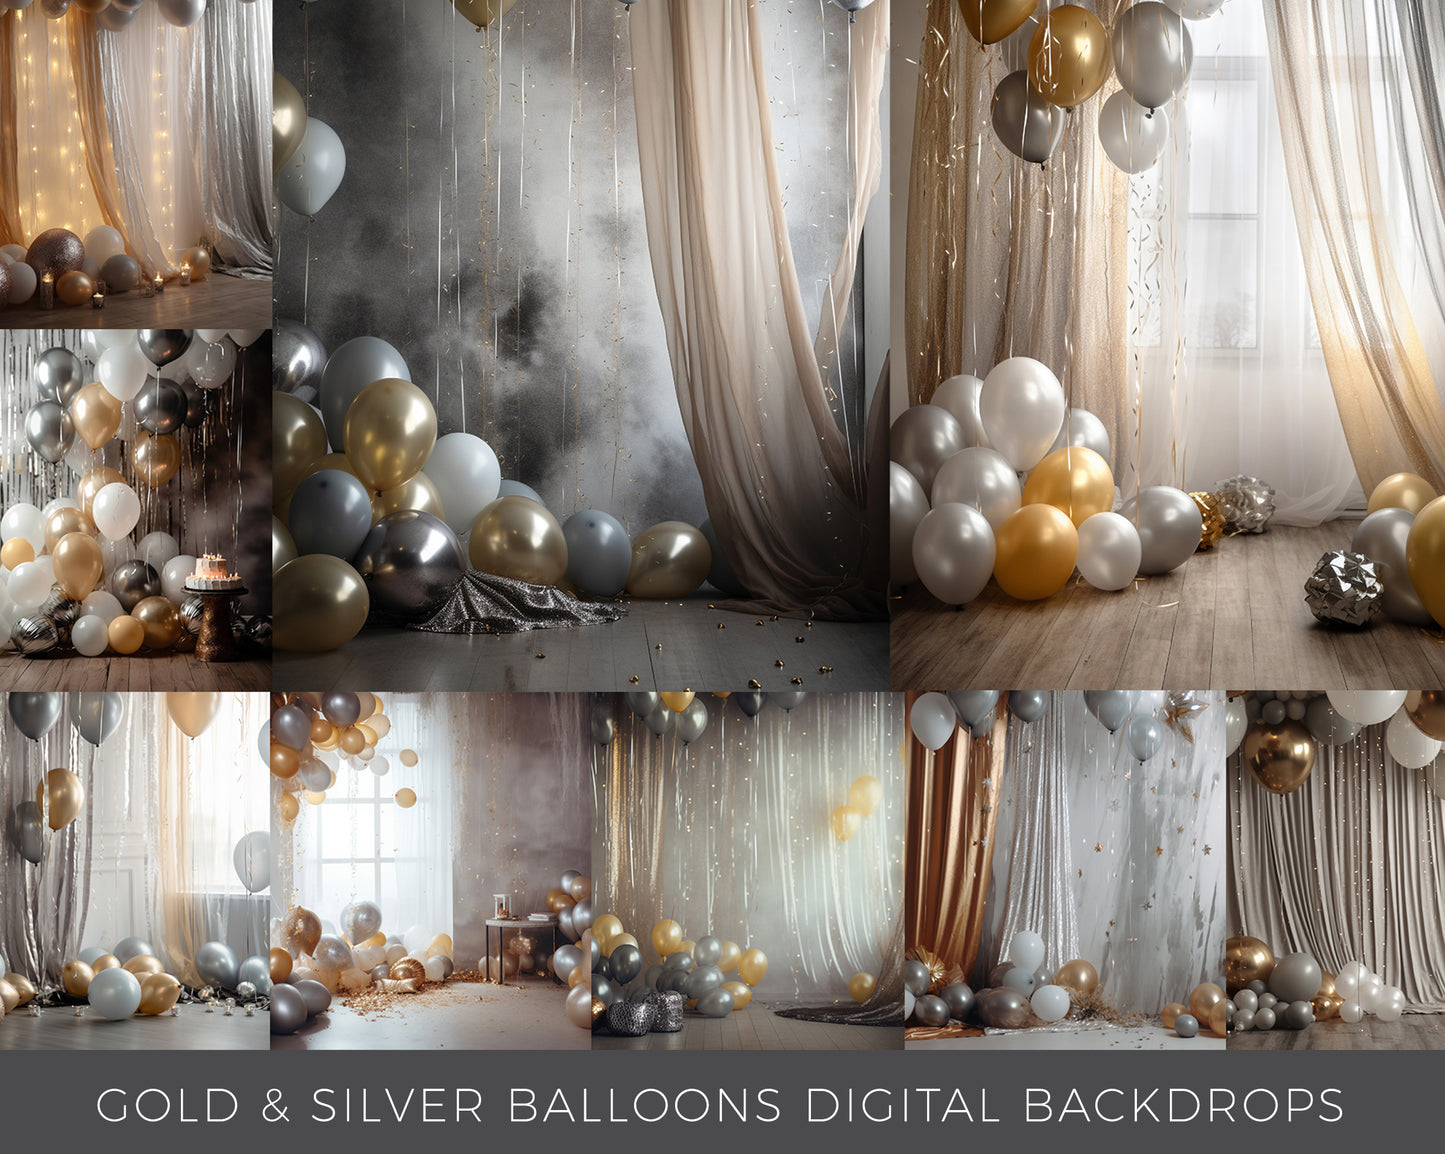 10 Gold and Silver Balloons Digital Backdrops